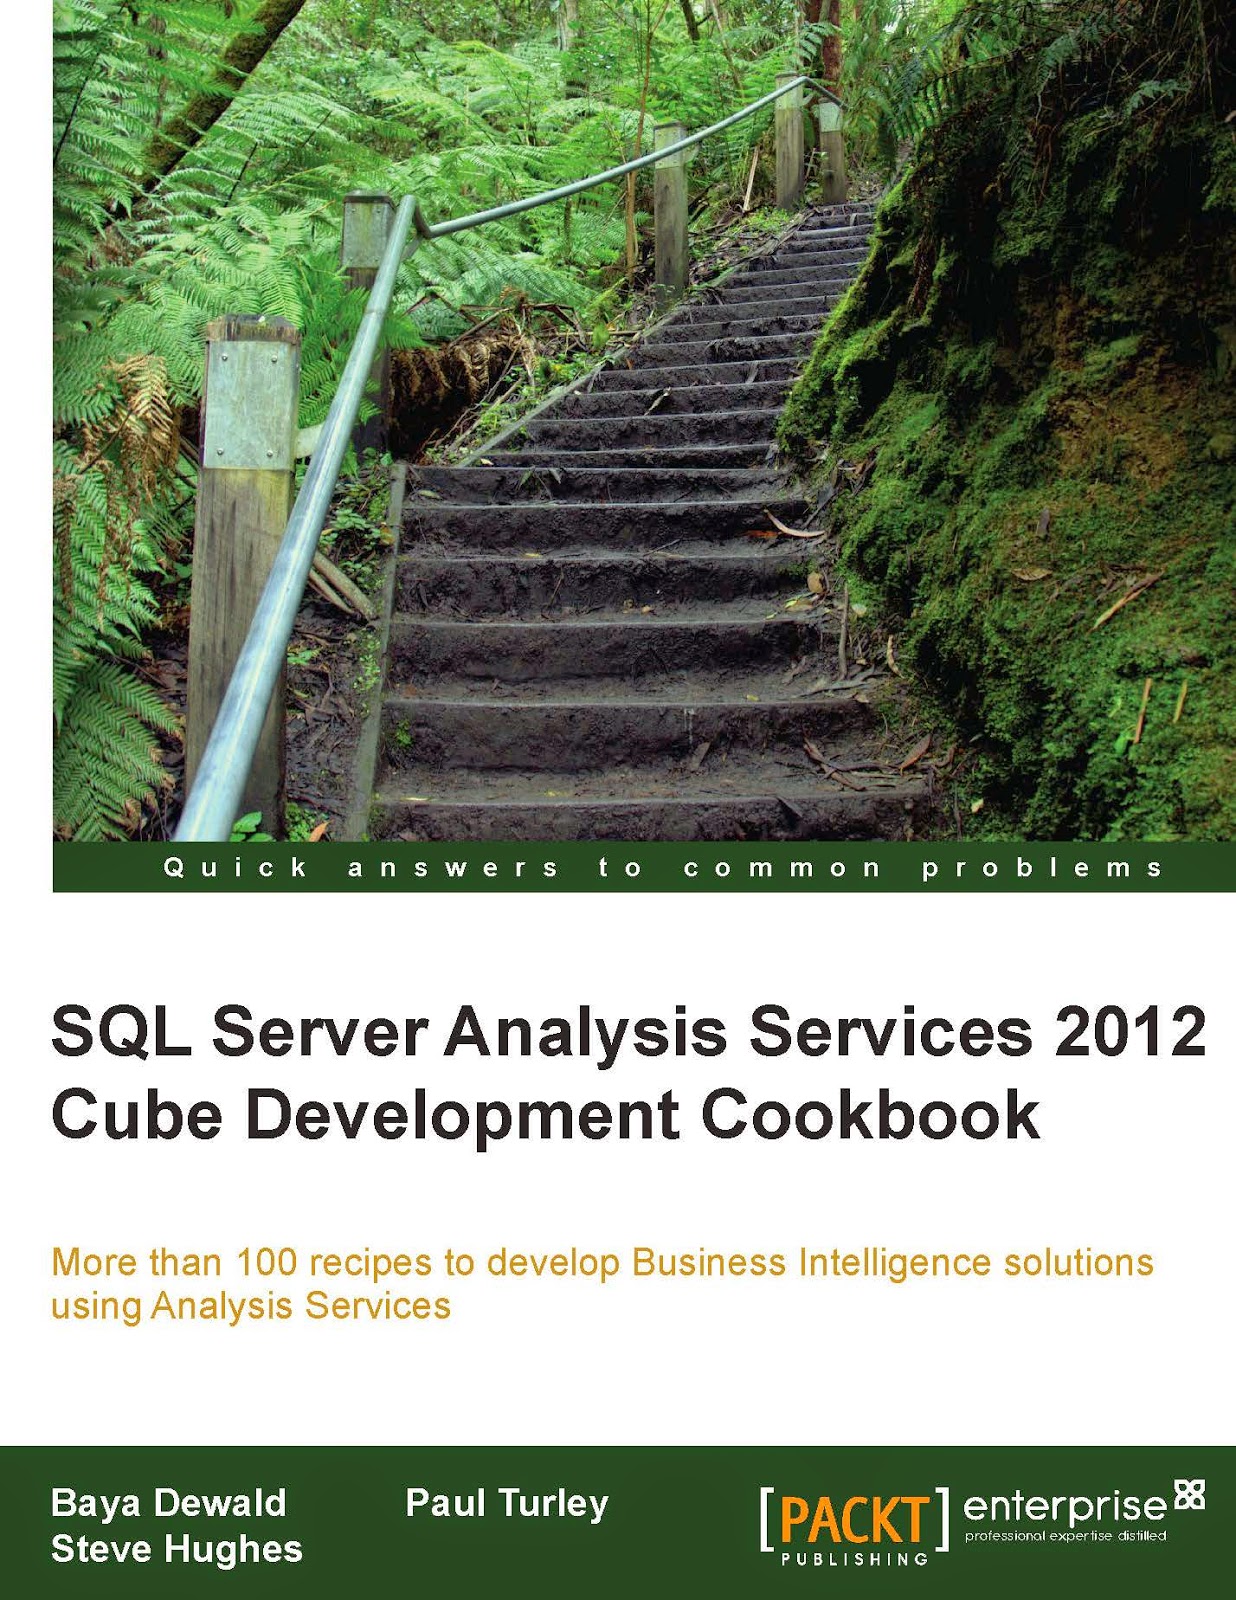 http://kingcheapebook.blogspot.com/2014/07/sql-server-analysis-services-2012-cube.html